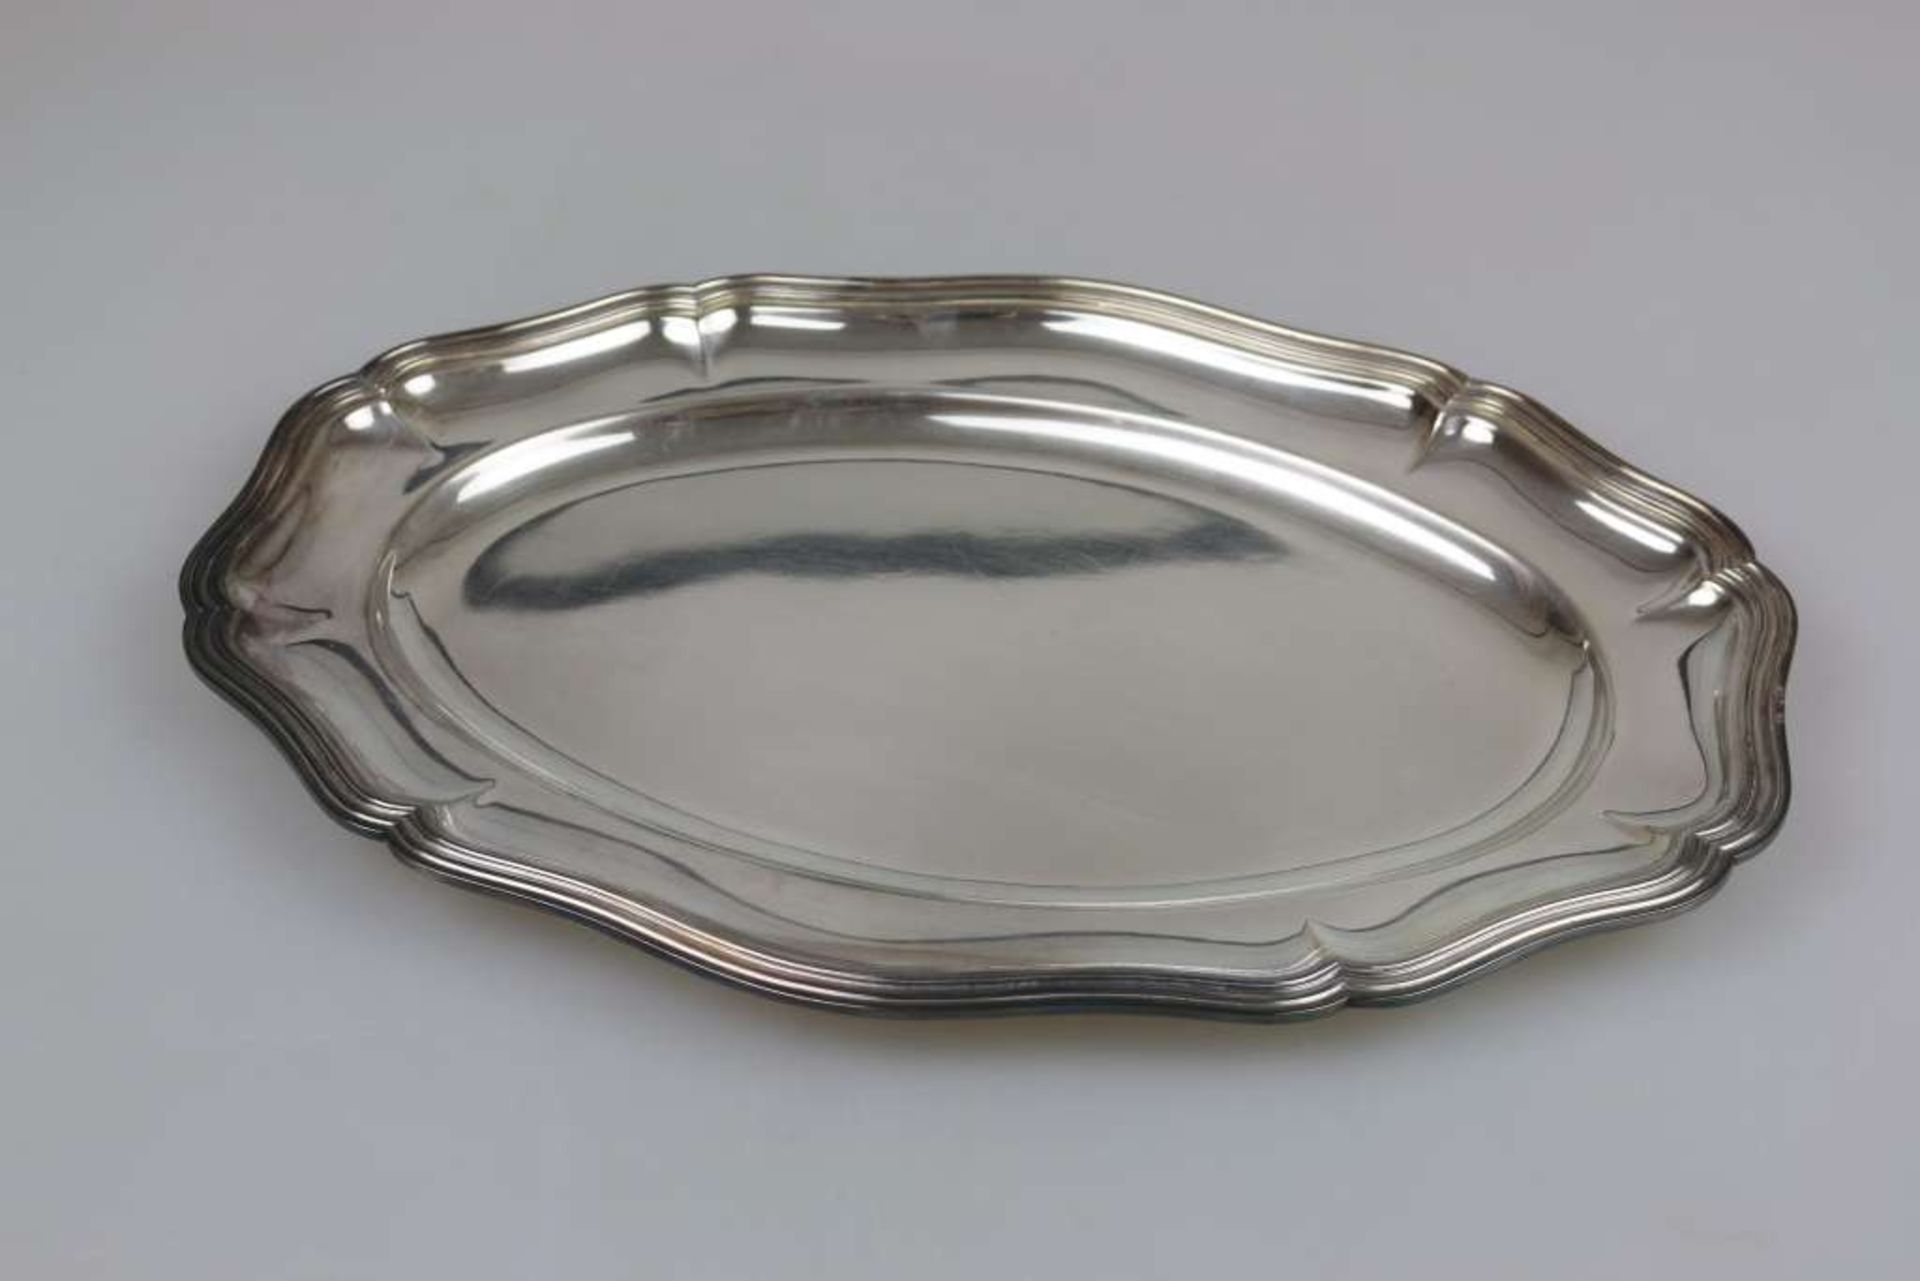 Große Platte, oval, mit profilierter Randung, versilbert, Markung: Metal Plano AB 45, 1235 g, L: